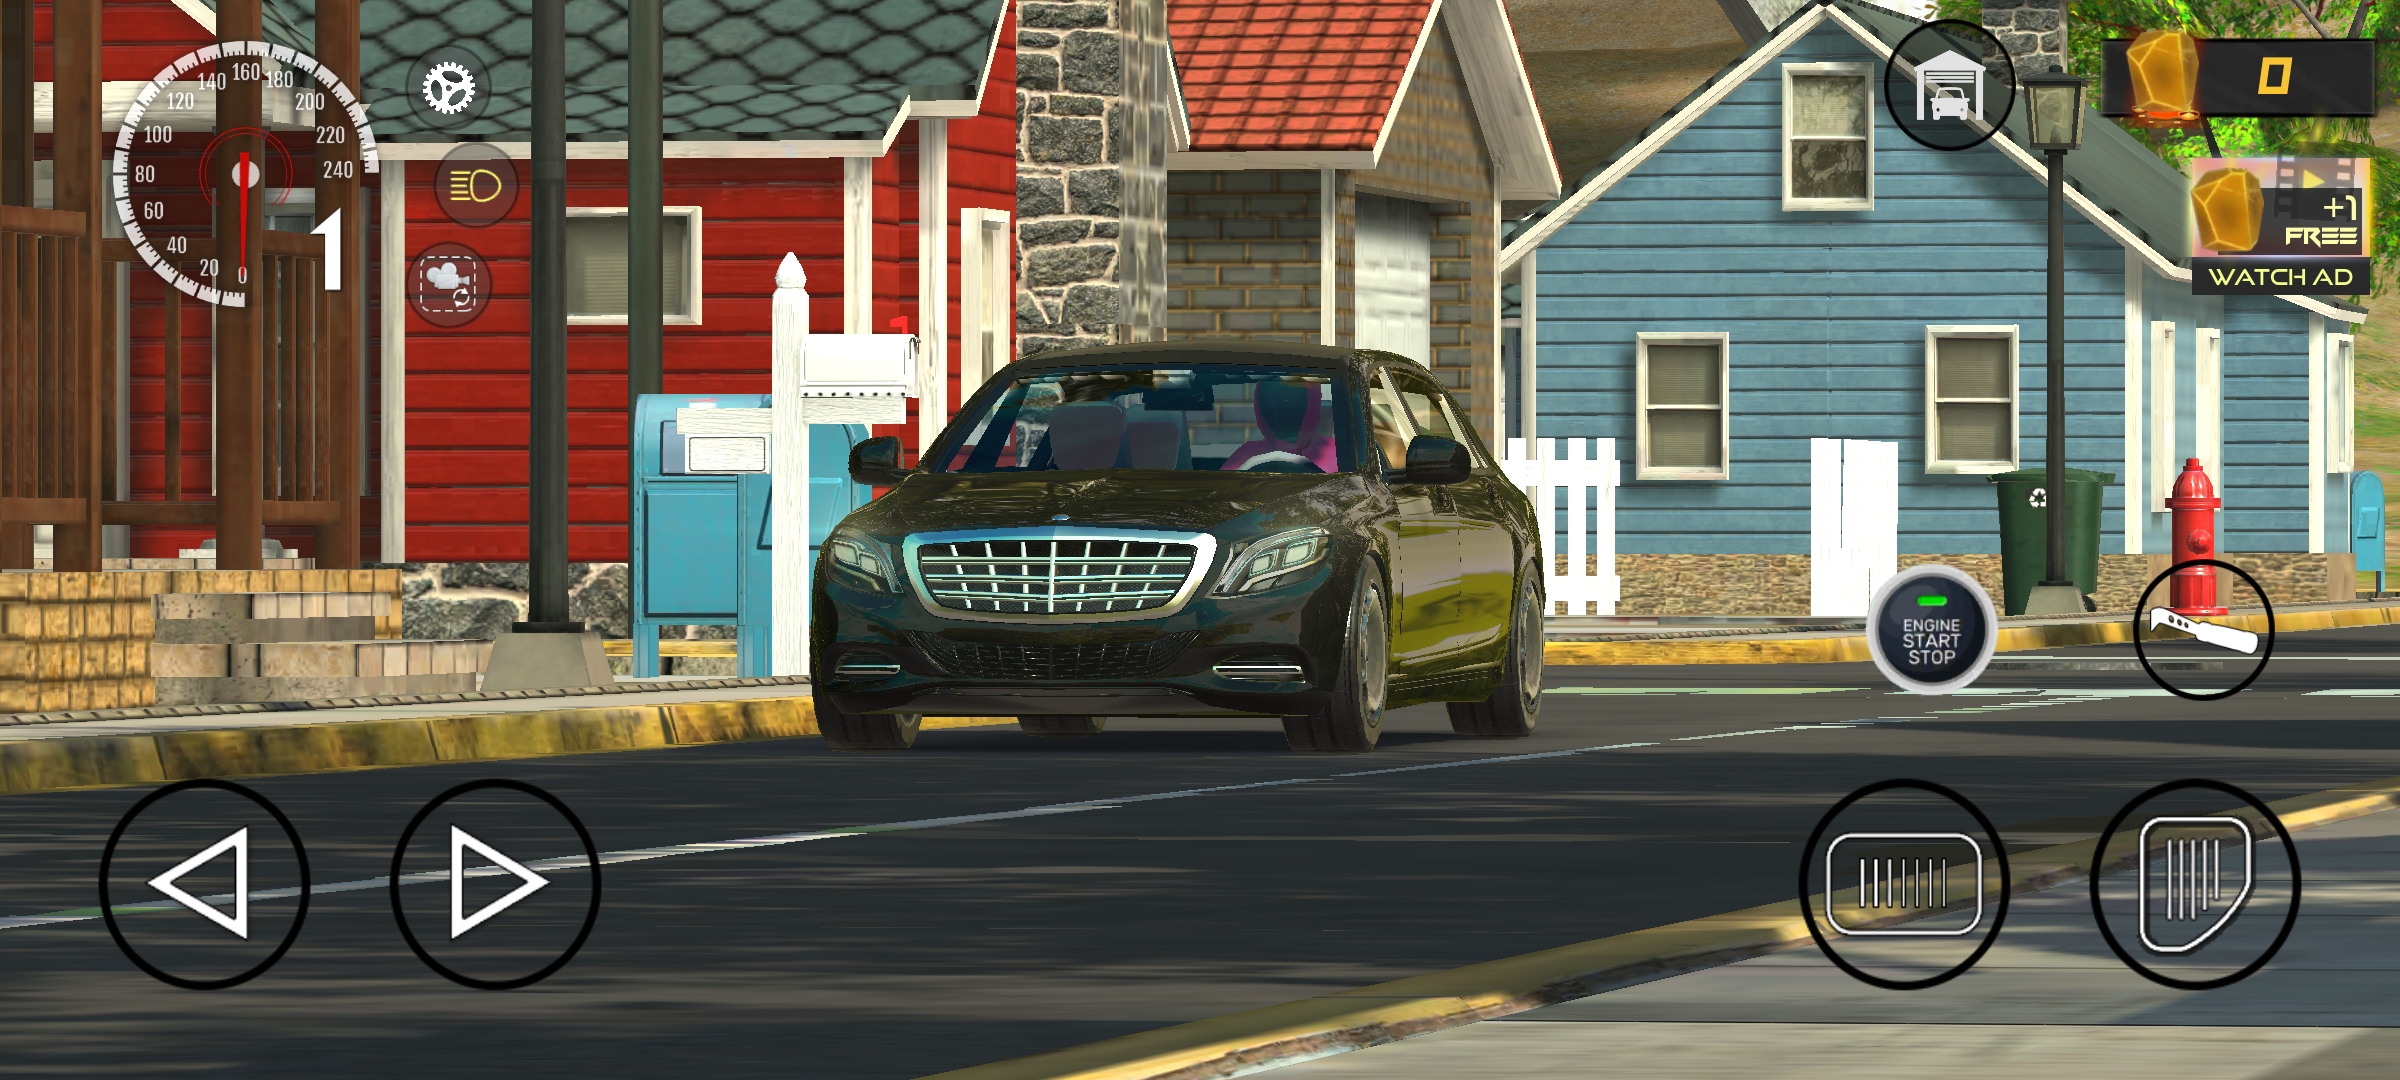 [Game Android] Driver Life Car Simulator